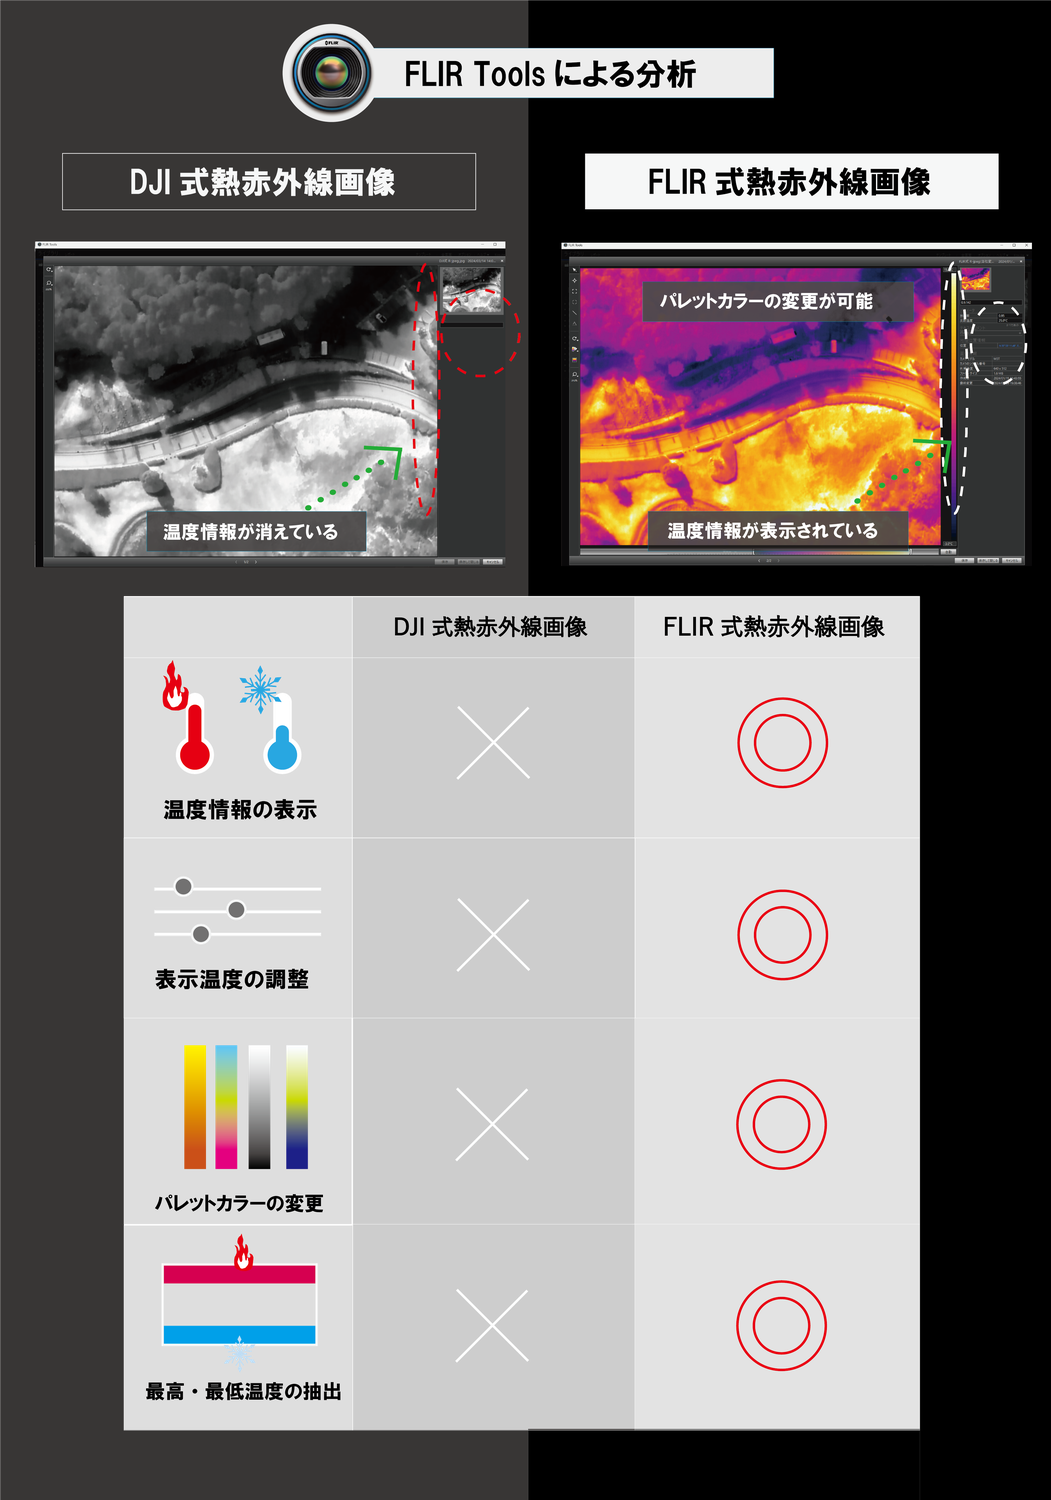 DJIの赤外線写真を解析可能なFLIR形式に変換できる様になりました!